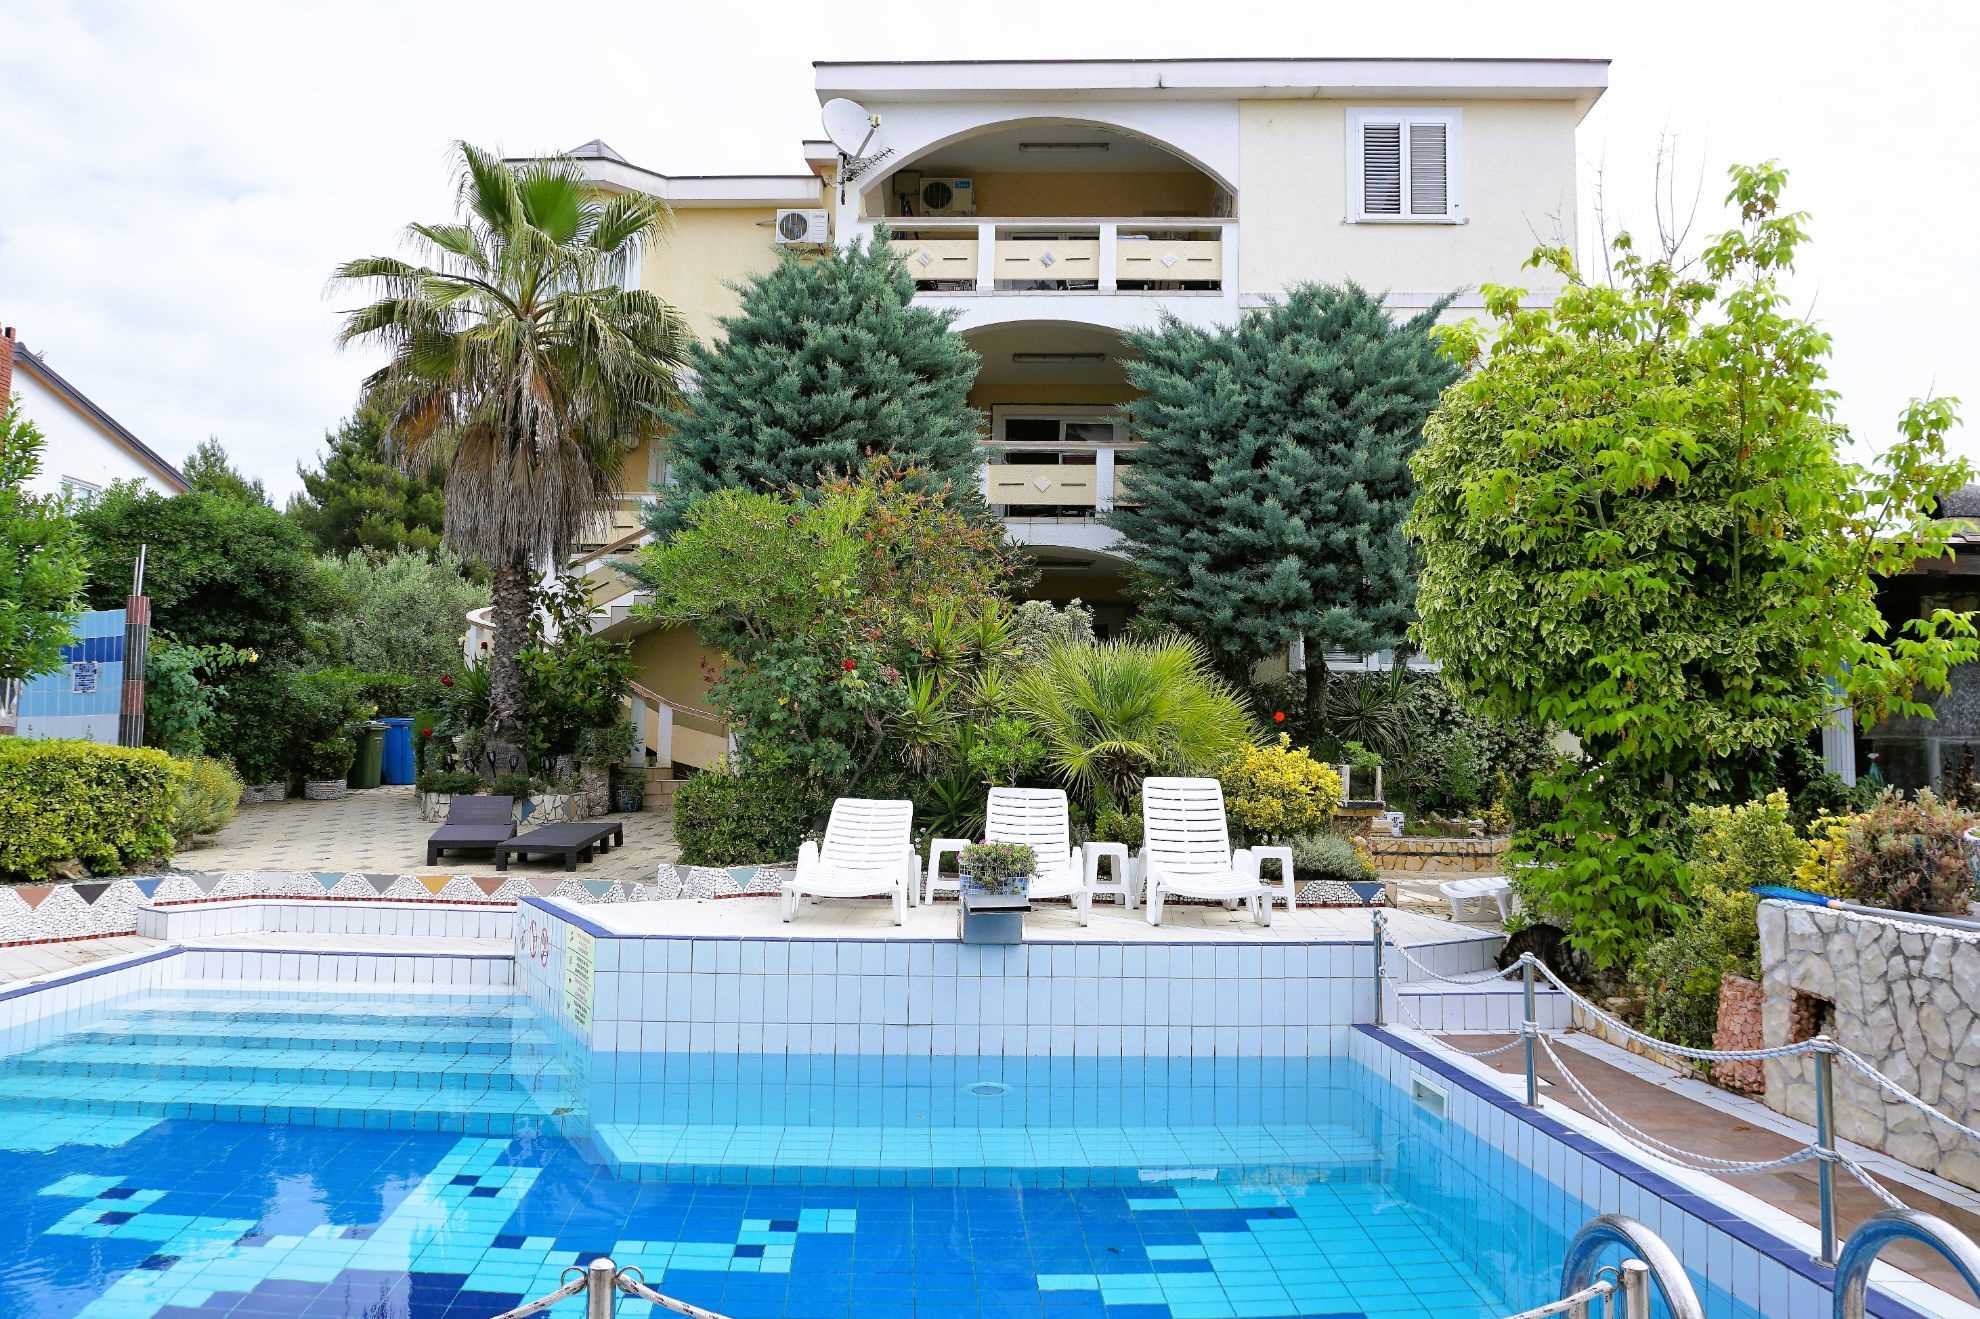 Image of Apartment Aqua 2 with swimming pool